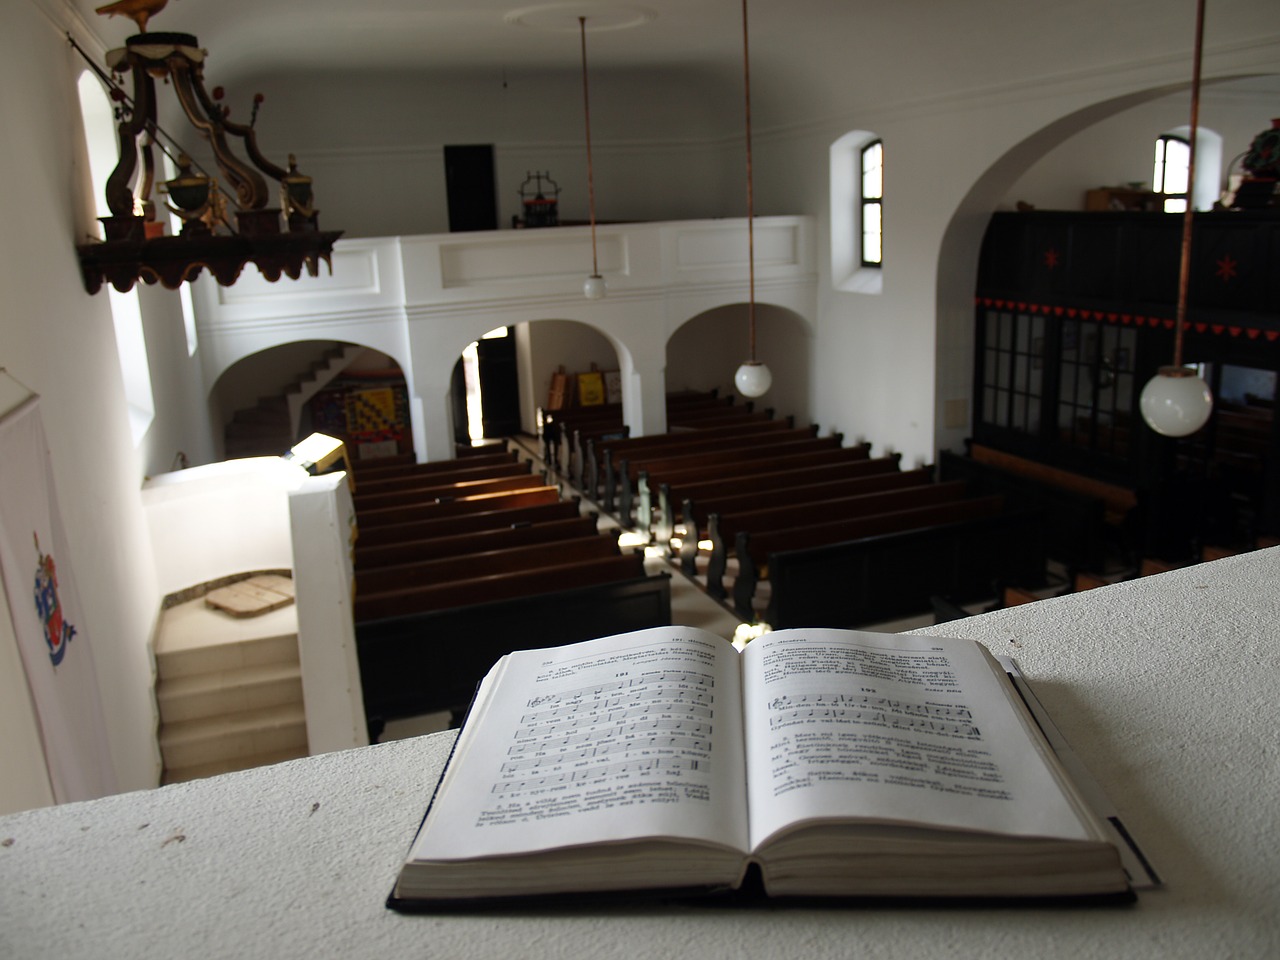 kopács reformed church organ free photo